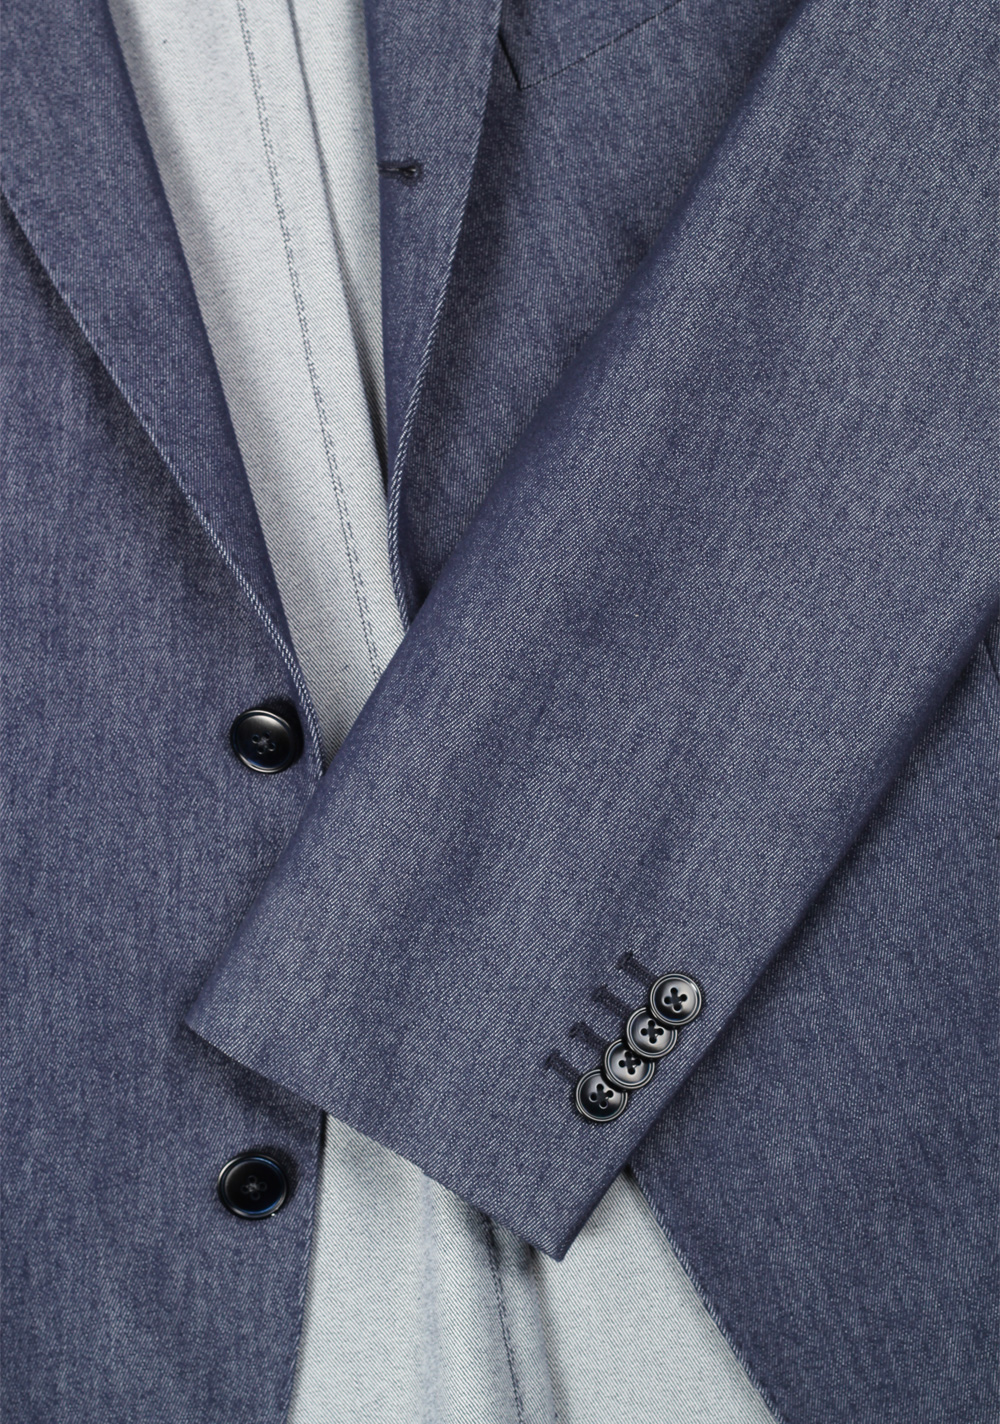 Boglioli K Jacket Blue Denim Sport Coat Size 50 / 40R U.S. | Costume Limité